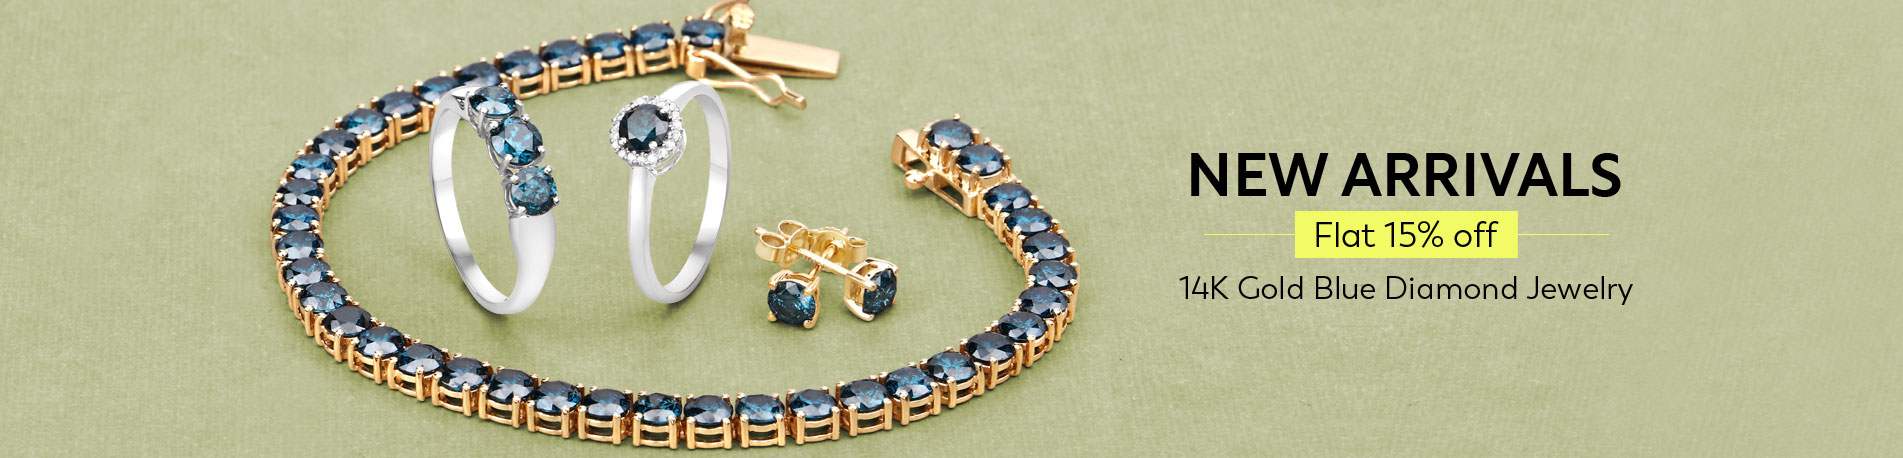 NEW ARRIVALS - 14k Gold Blue Diamond Jewelry